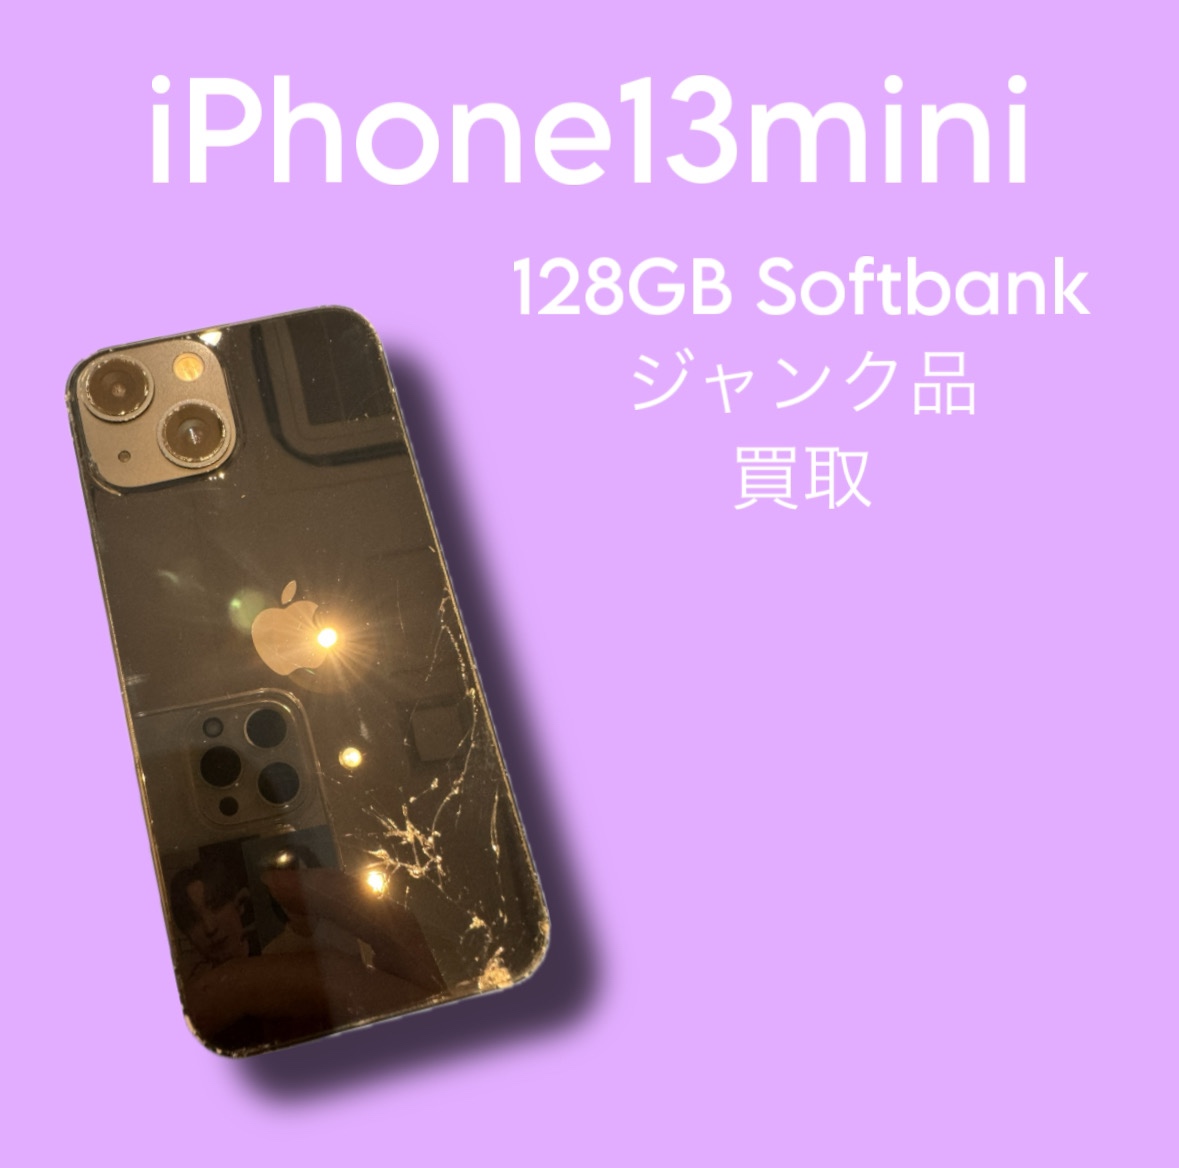 iPhone13mini・128GB・Softbank・ネット制限〇【天神地下街店】